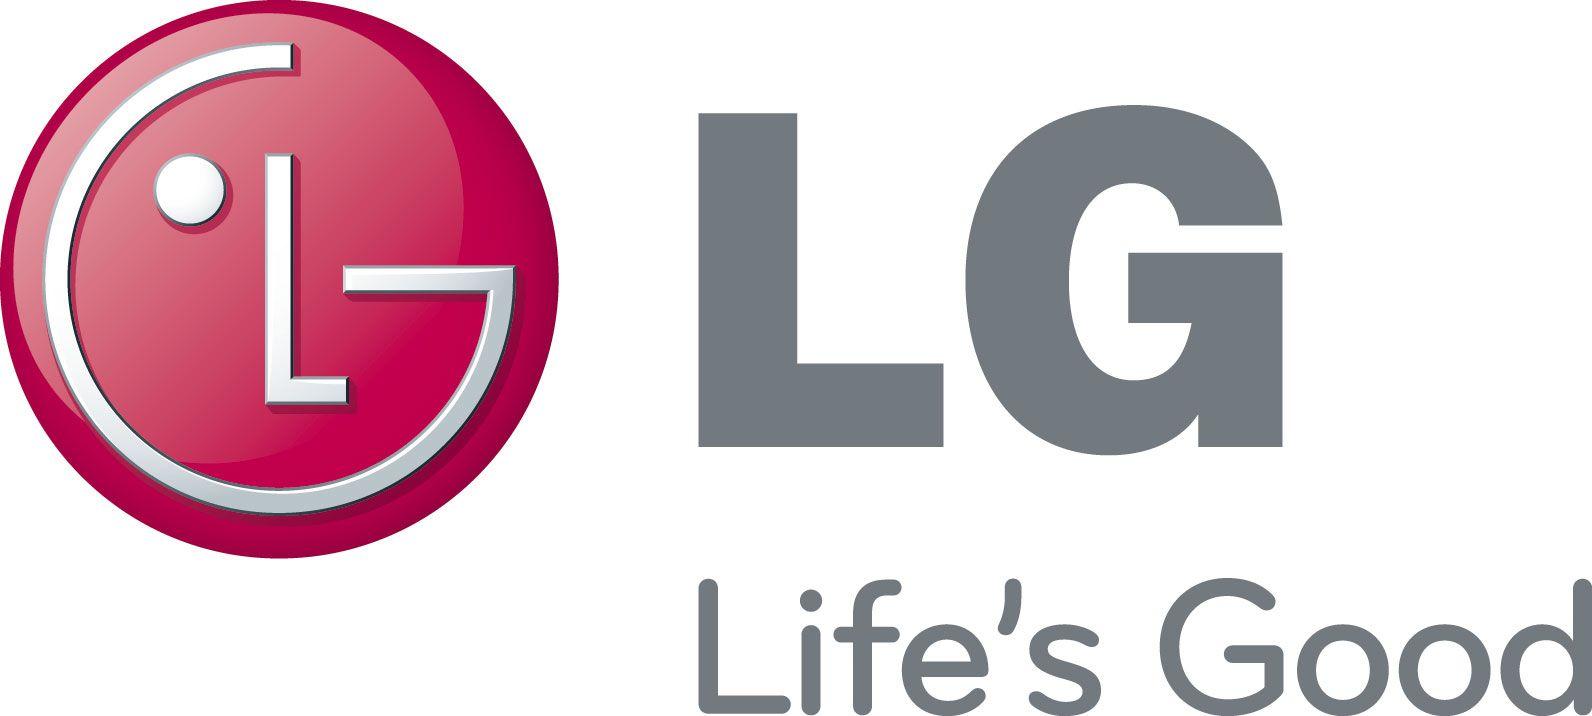 LG Appliances Logo - Image - LG LOGO NEW.jpg | Logopedia | FANDOM powered by Wikia